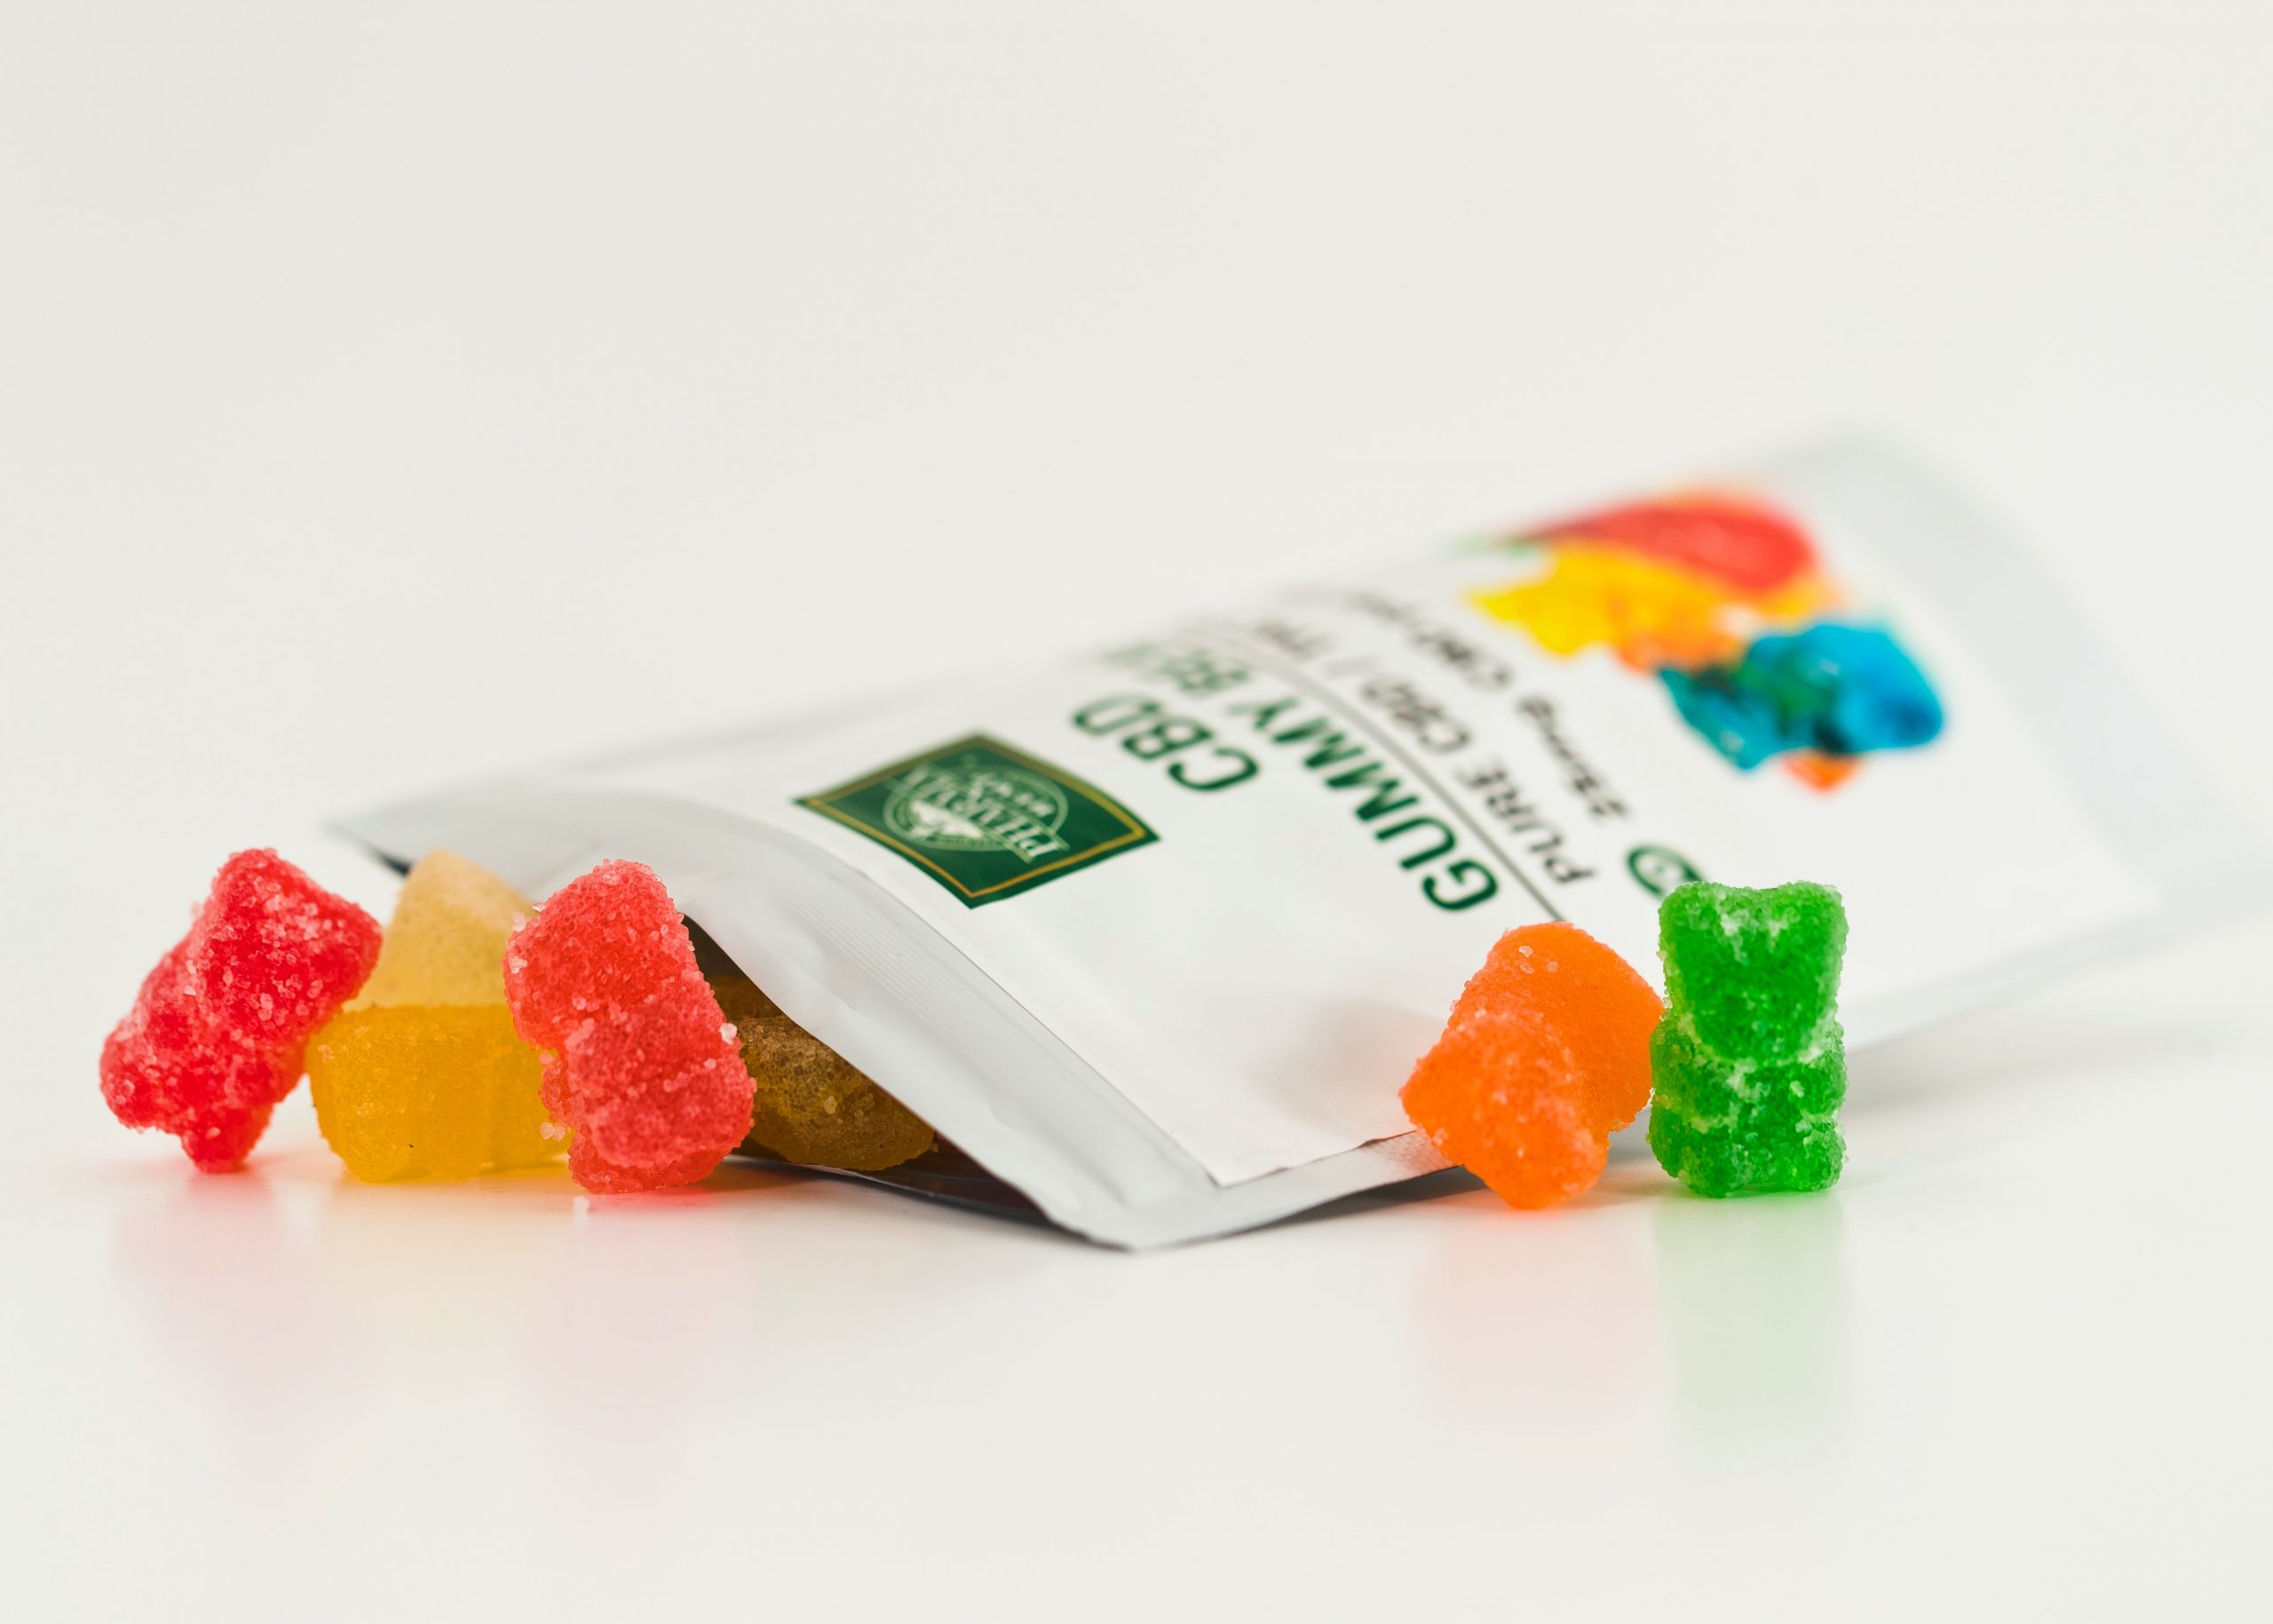 15 Best CBD Gummies